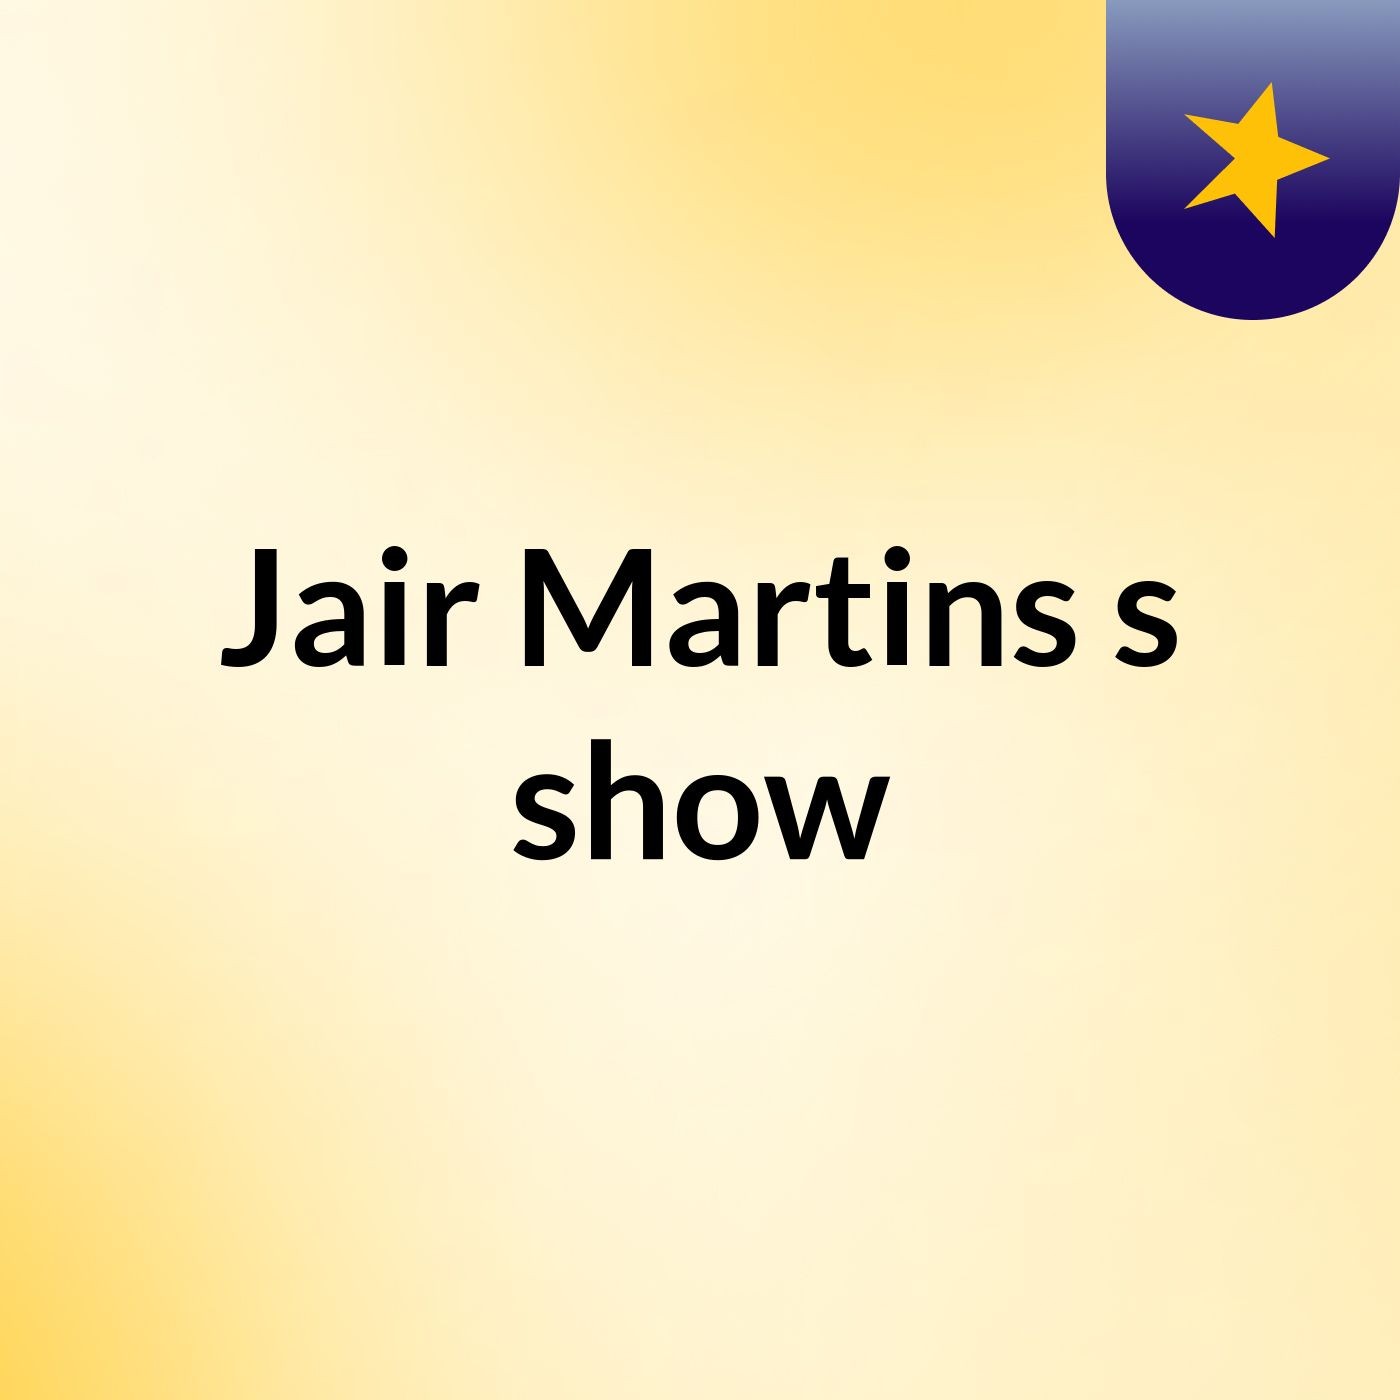 Jair Martins's show